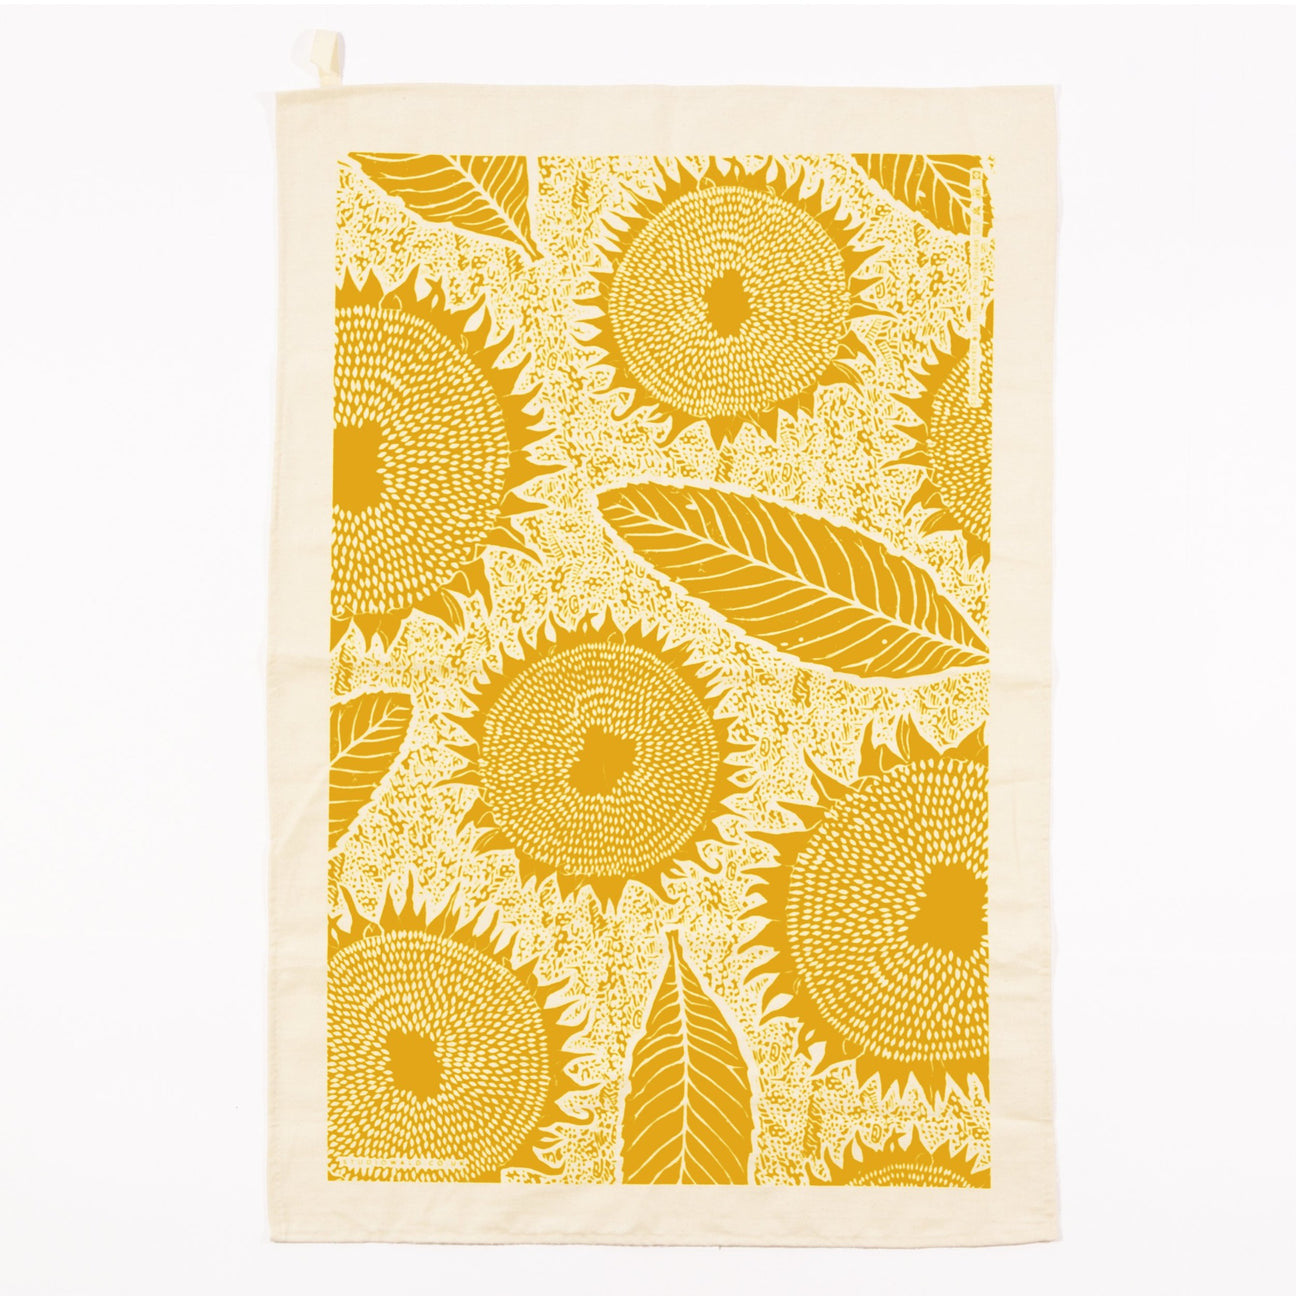 Studio Wald Tea towel - The Bristol Artisan Handmade Sustainable Gifts and Homewares.